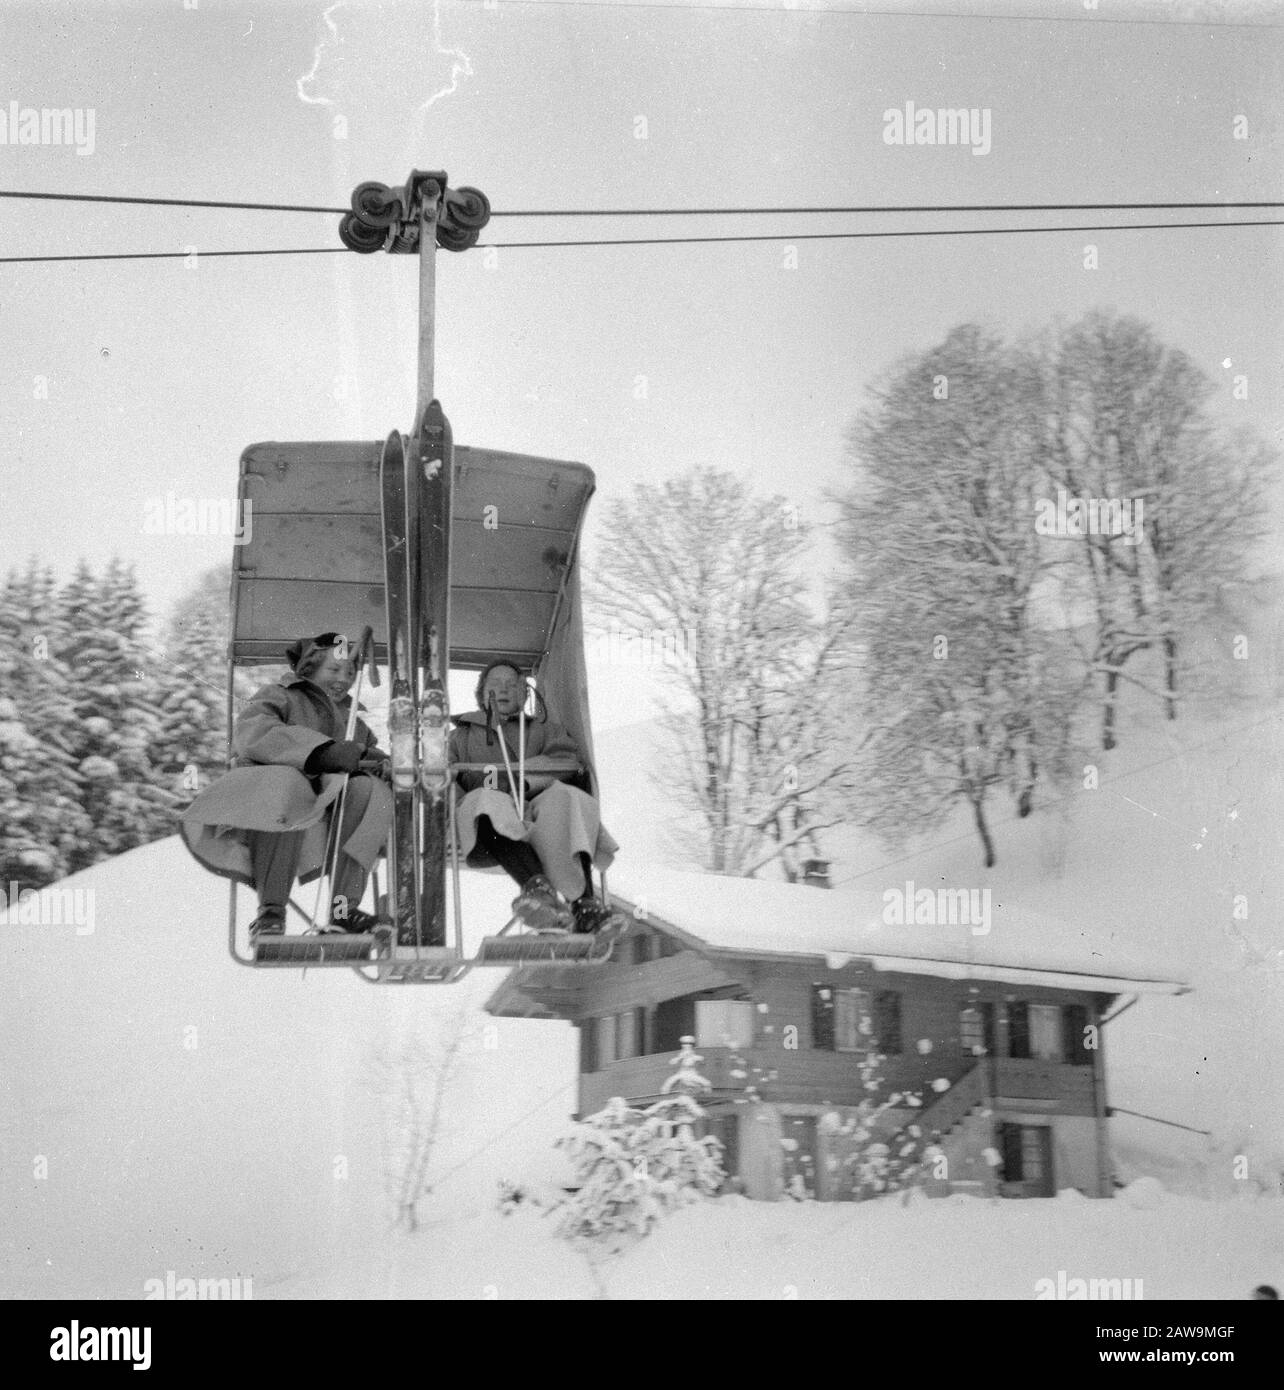 Ski location Black and White Stock Photos & Images - Alamy